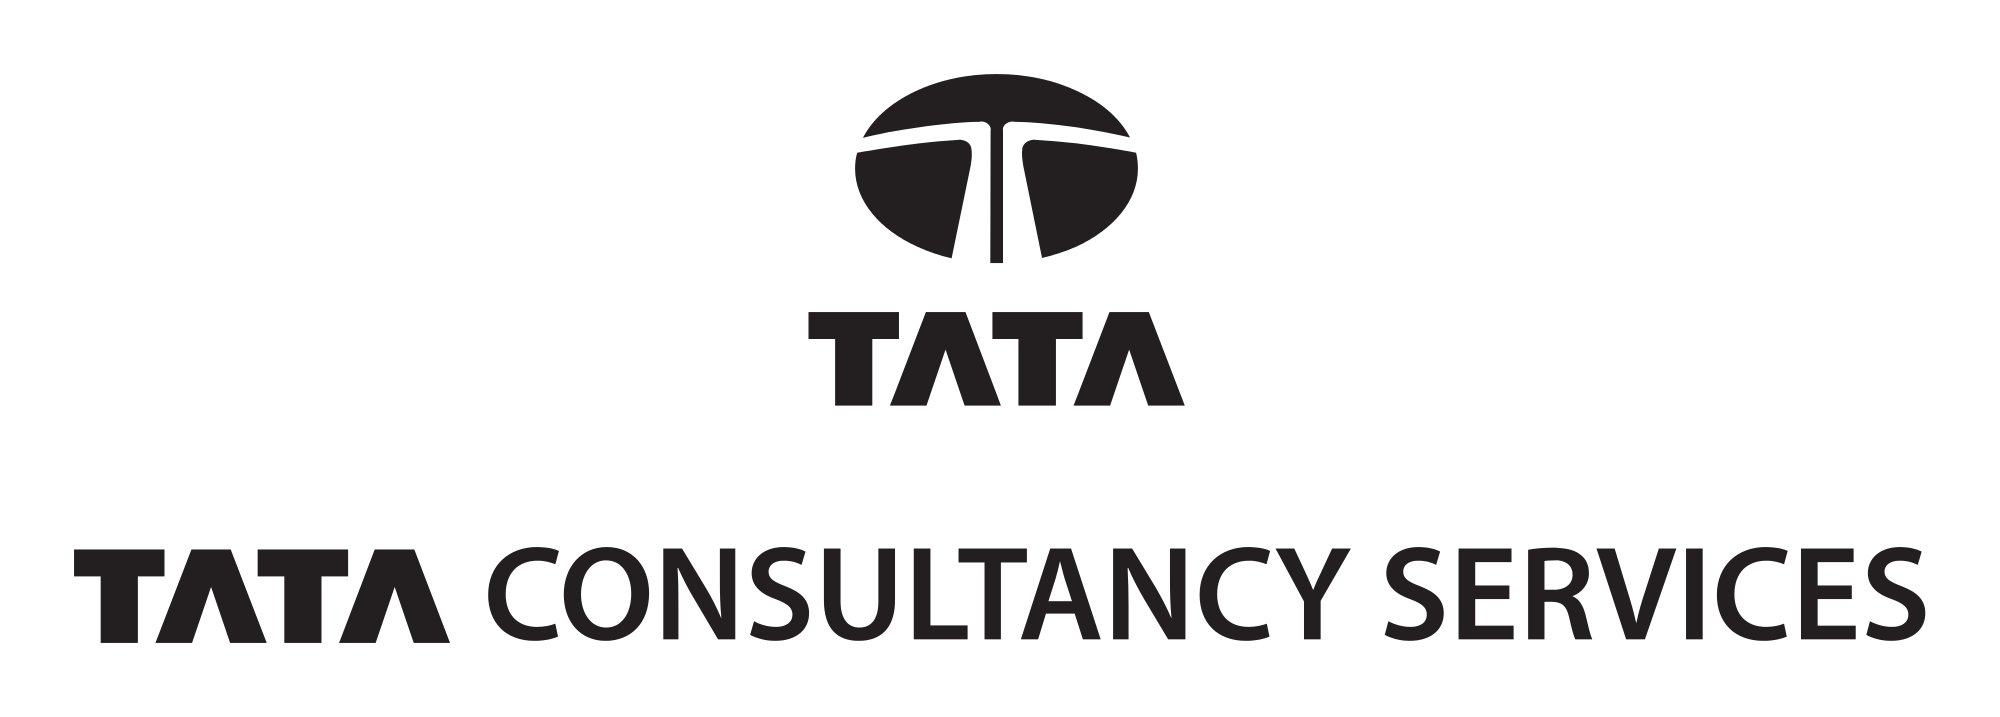 Tata Consultancy Services Logo - TATA Consultancy Services Logo blue.svg